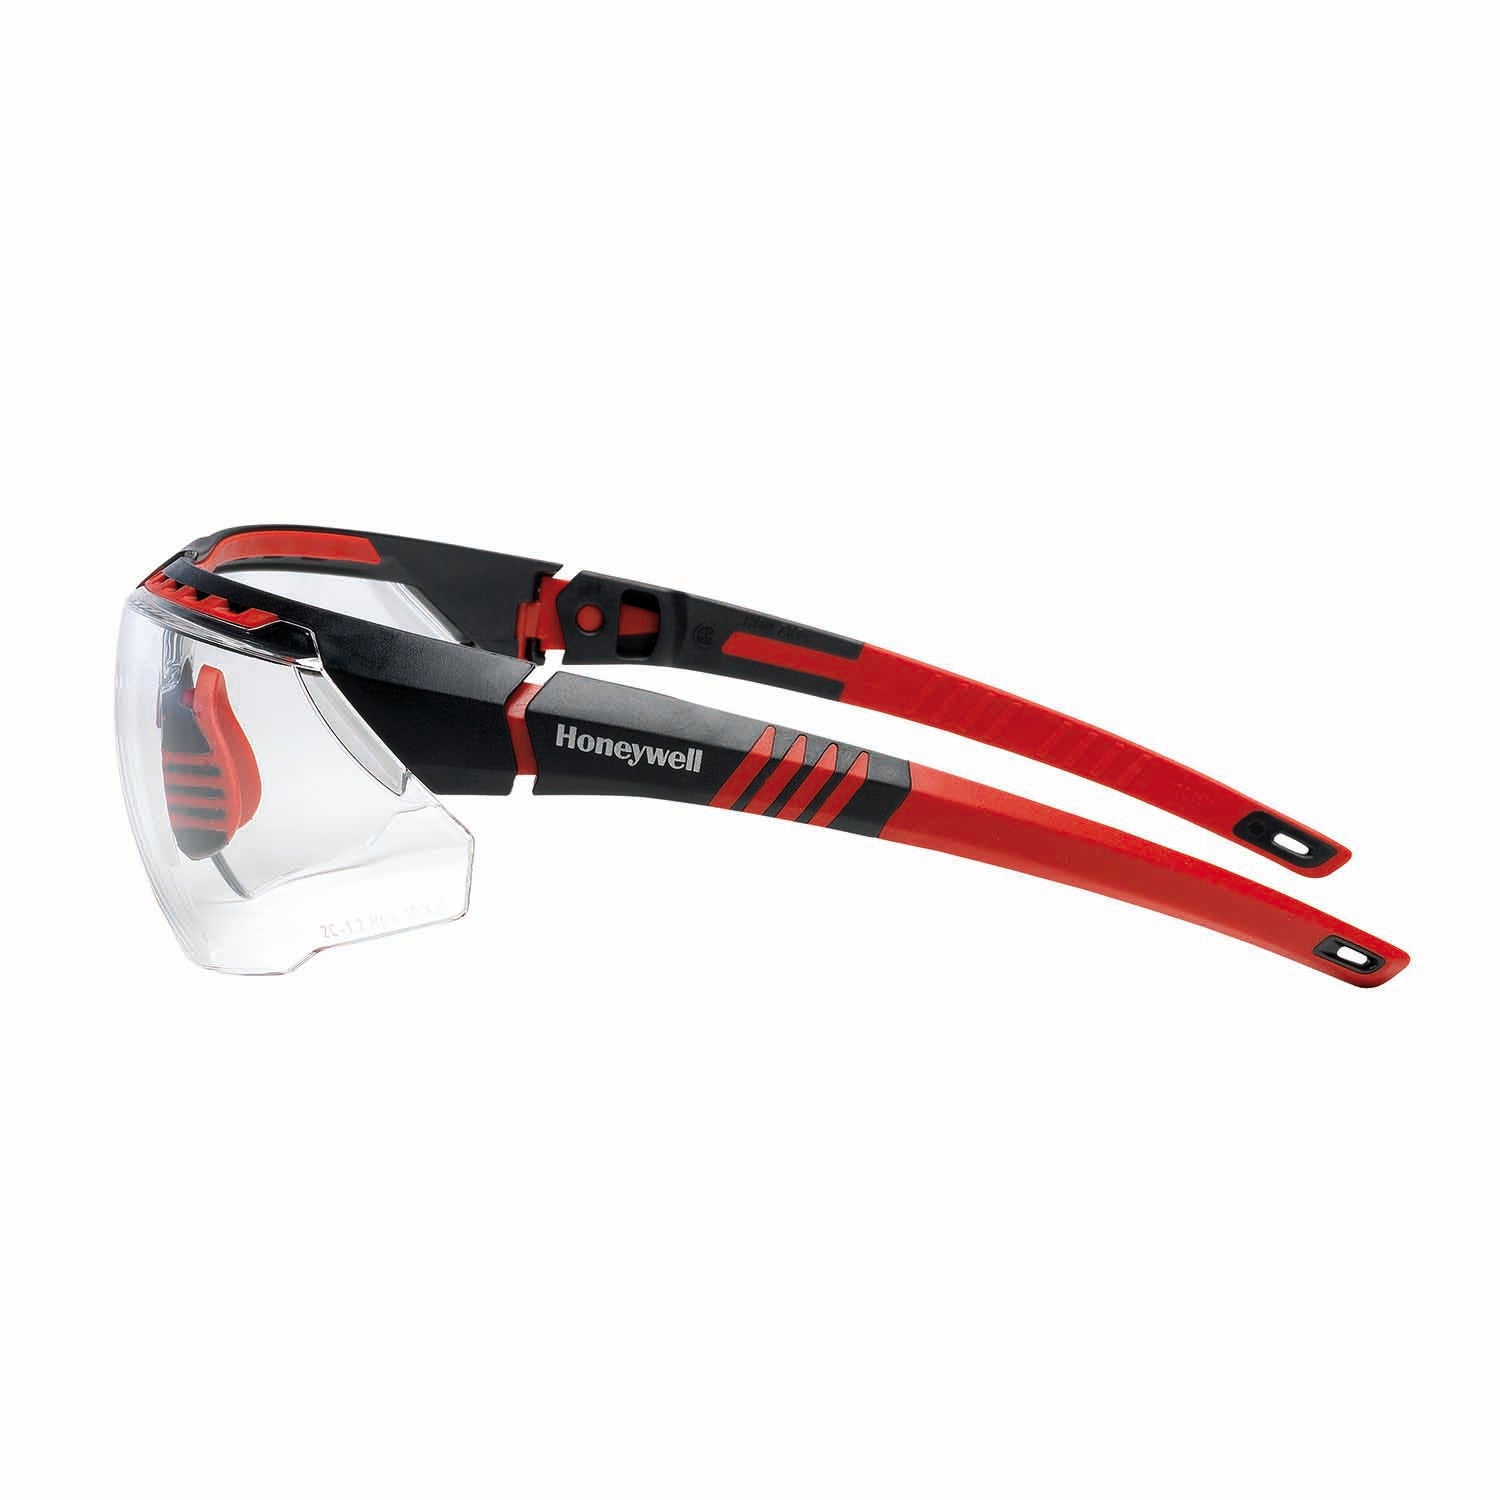 Honeywell  Safety glasses avatar black red frame clear lens